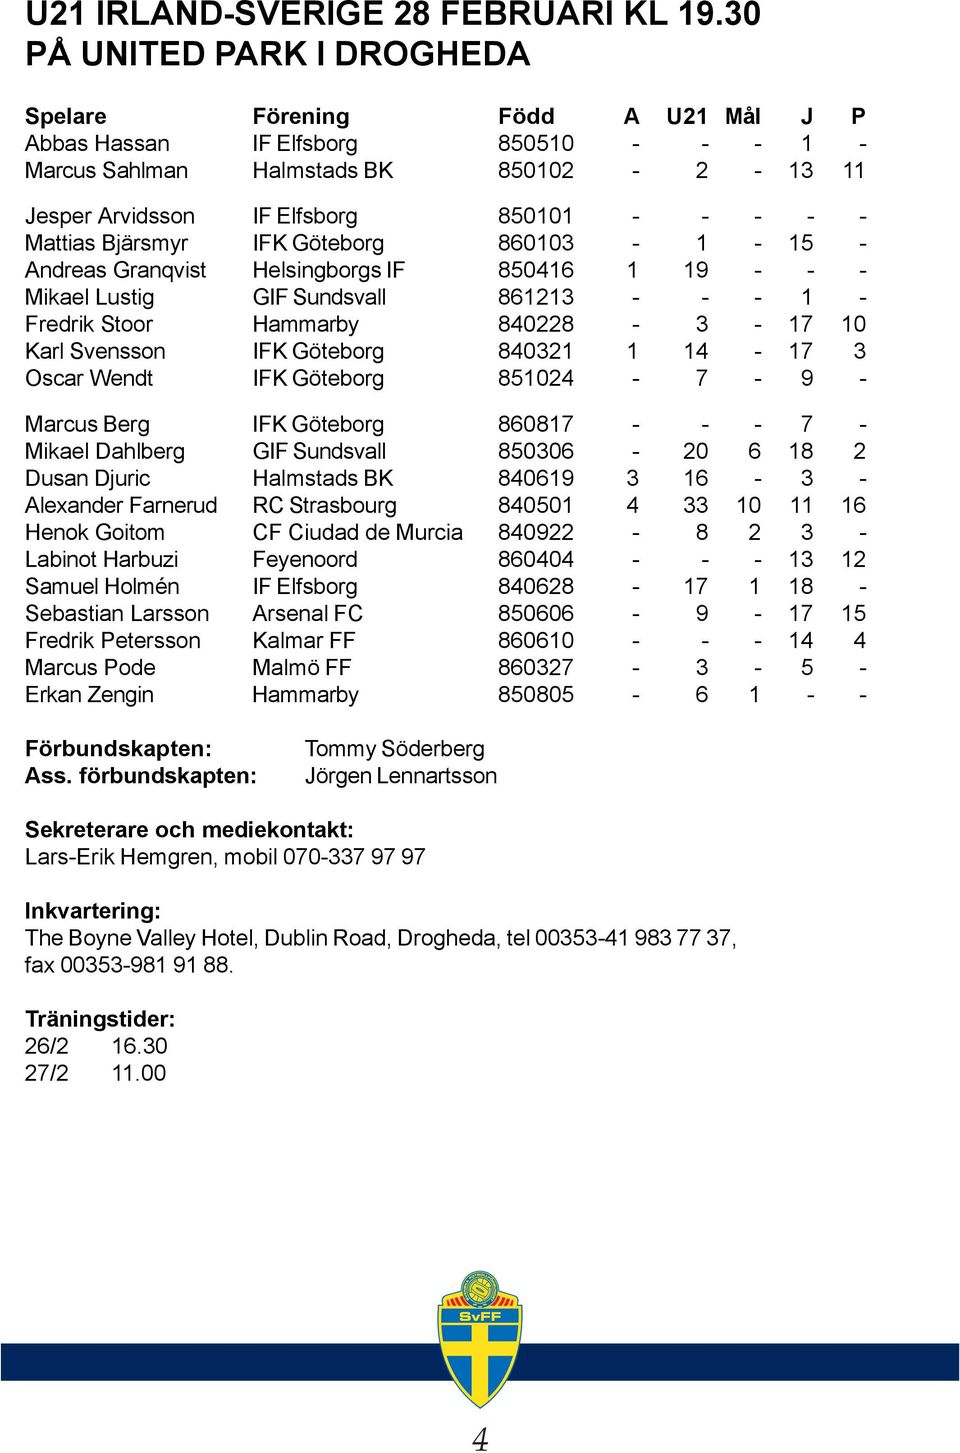 Mattias Bjärsmyr IFK Göteborg 860103-1 - 15 - Andreas Granqvist Helsingborgs IF 850416 1 19 - - - Mikael Lustig GIF Sundsvall 861213 - - - 1 - Fredrik Stoor Hammarby 840228-3 - 17 10 Karl Svensson